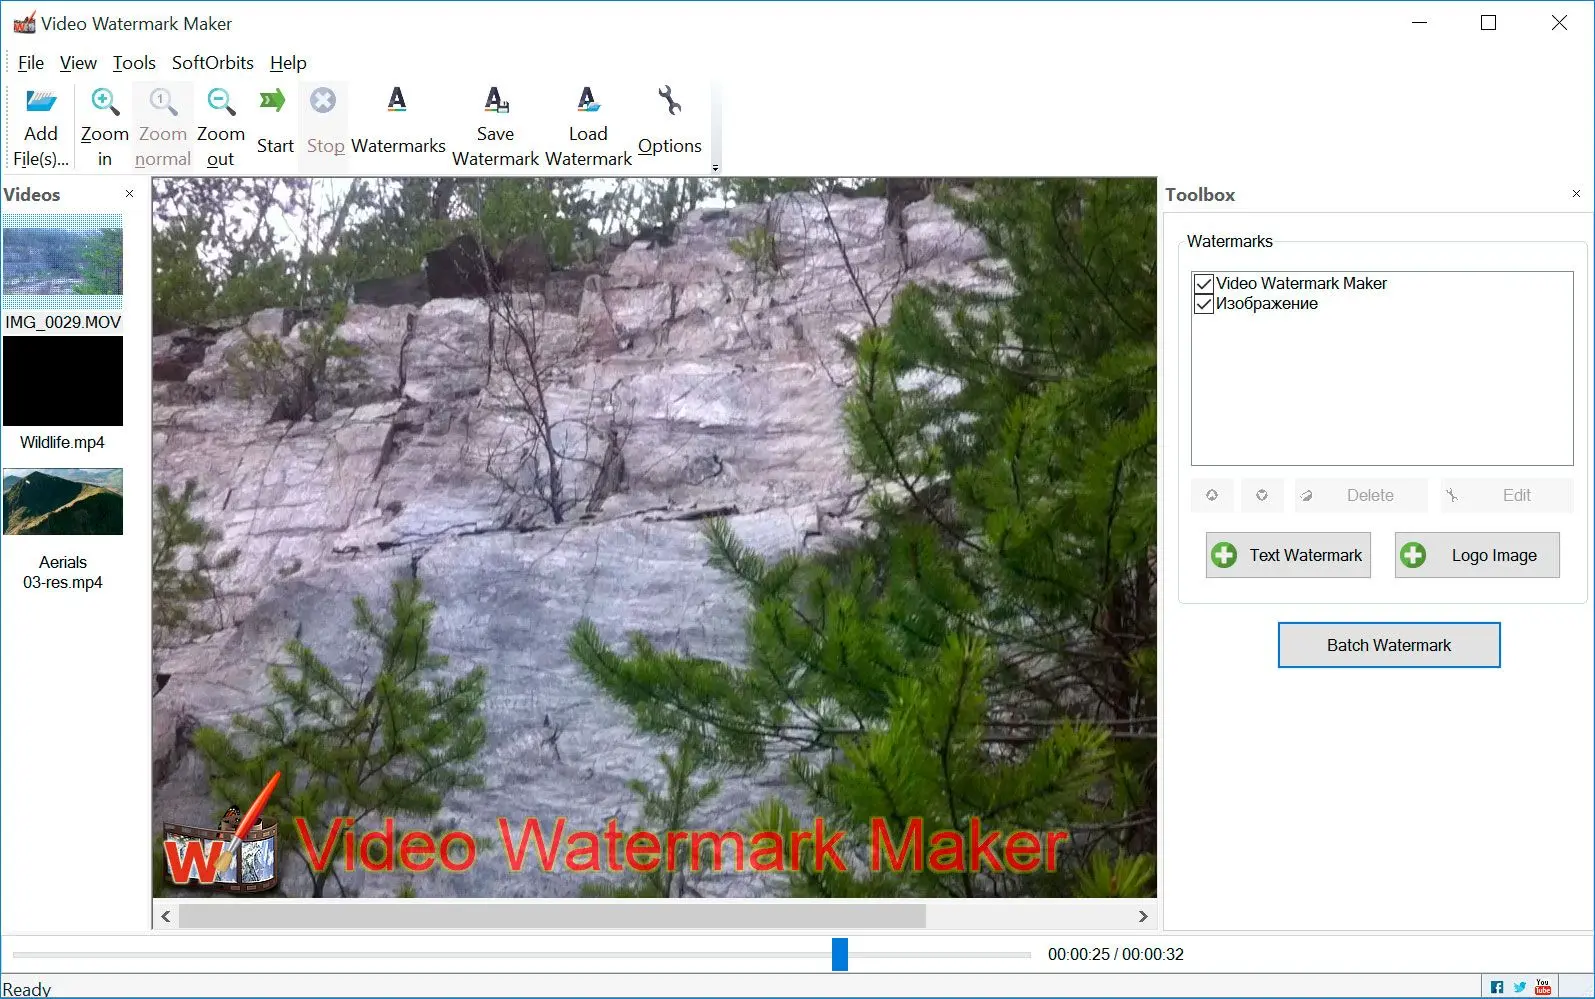 Video Watermark Maker Capturas de pantalla.